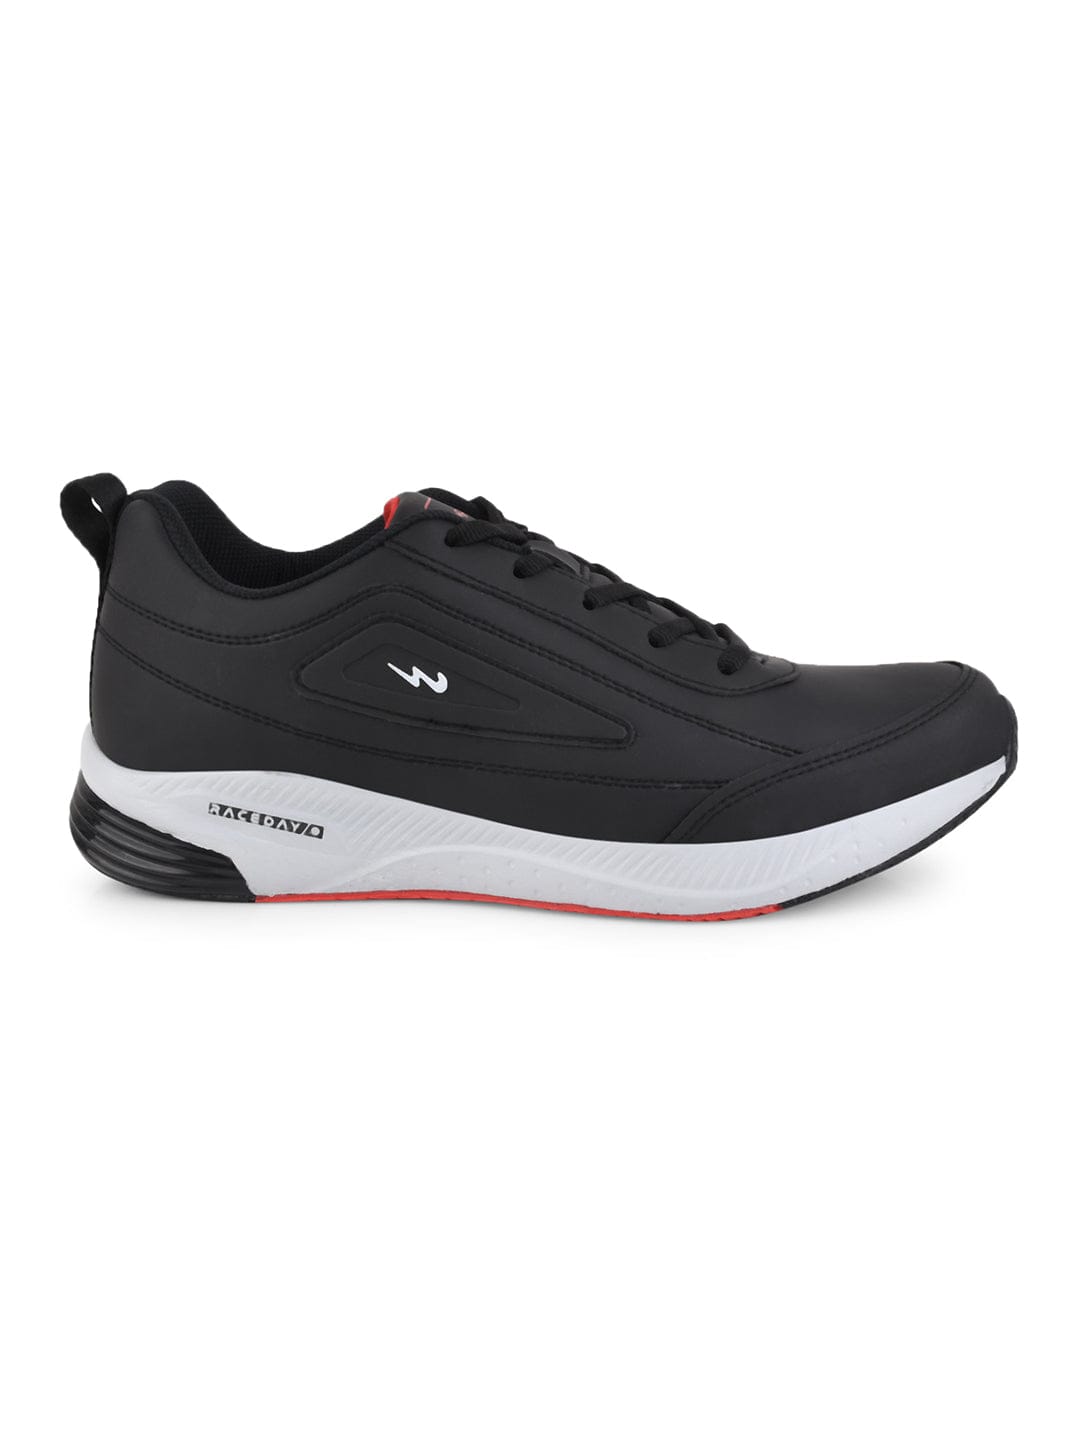 SEGA Sports Shoes Running Shoes For Men  Buy SEGA Sports Shoes Running  Shoes For Men Online at Best Price  Shop Online for Footwears in India   Flipkartcom